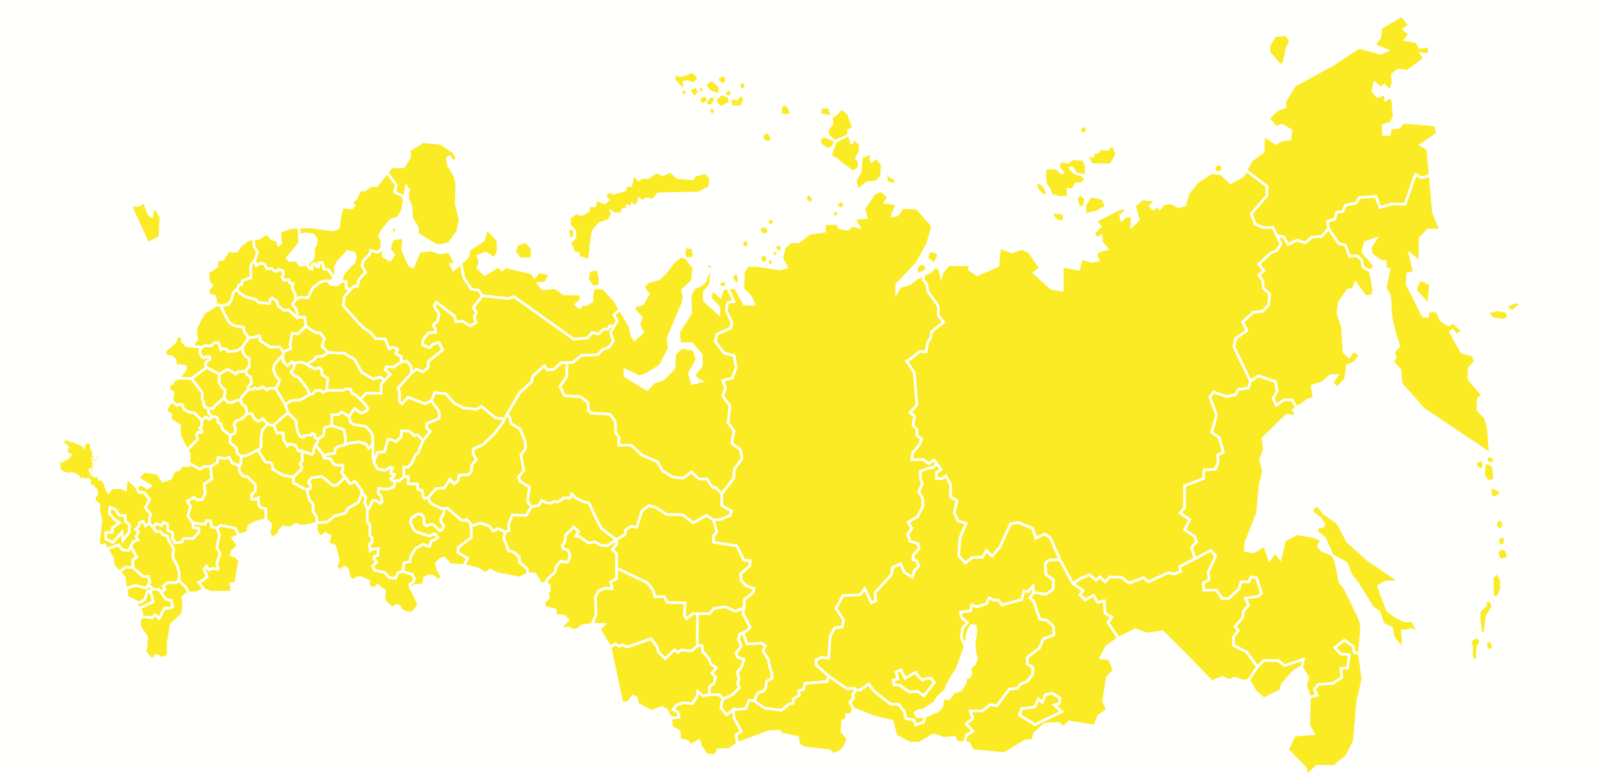 Прополис башкирский мед на карте россии